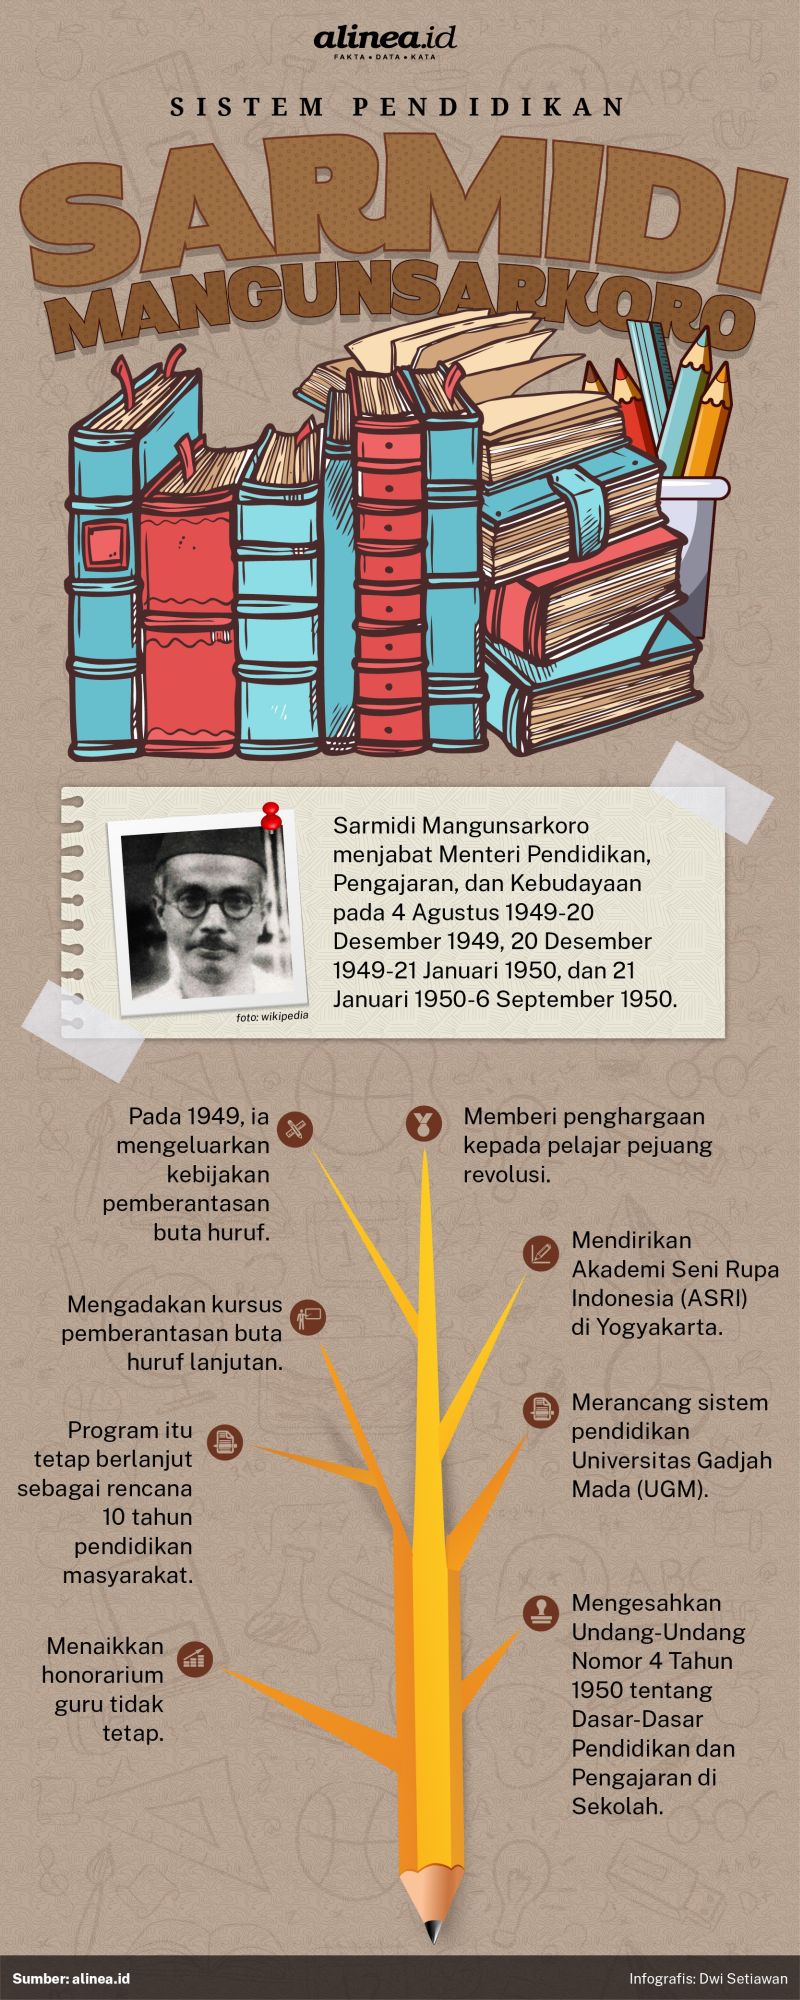 Infografik sistem pendidikan. Alinea.id/Dwi Setiawan.